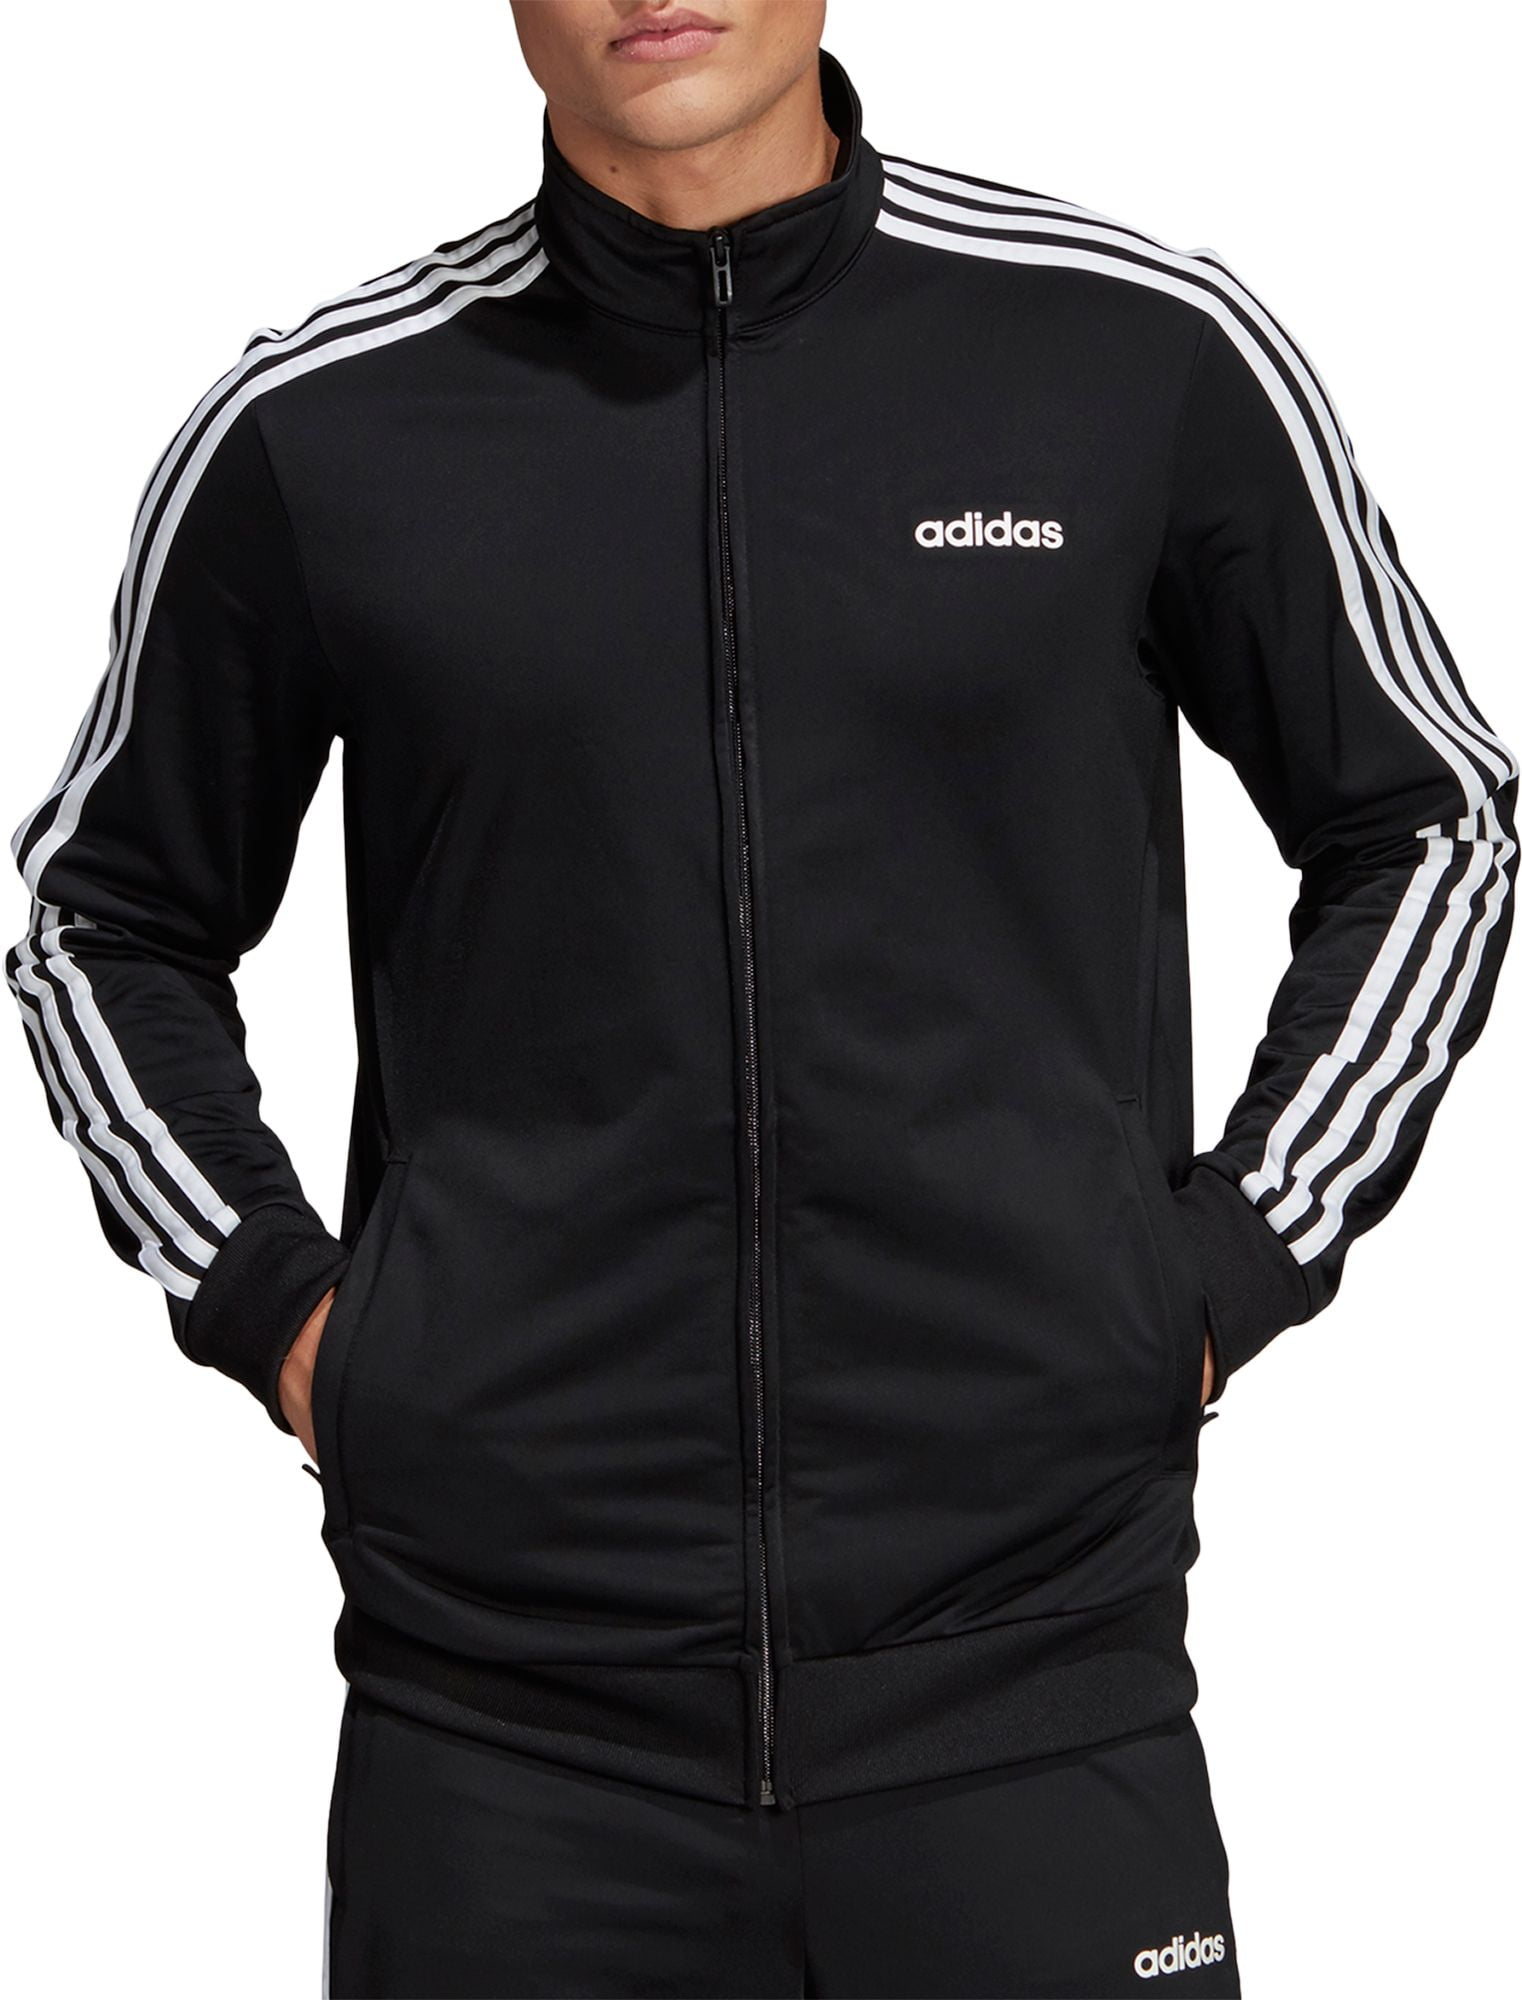 Adidas Men's Jacket - Black - S